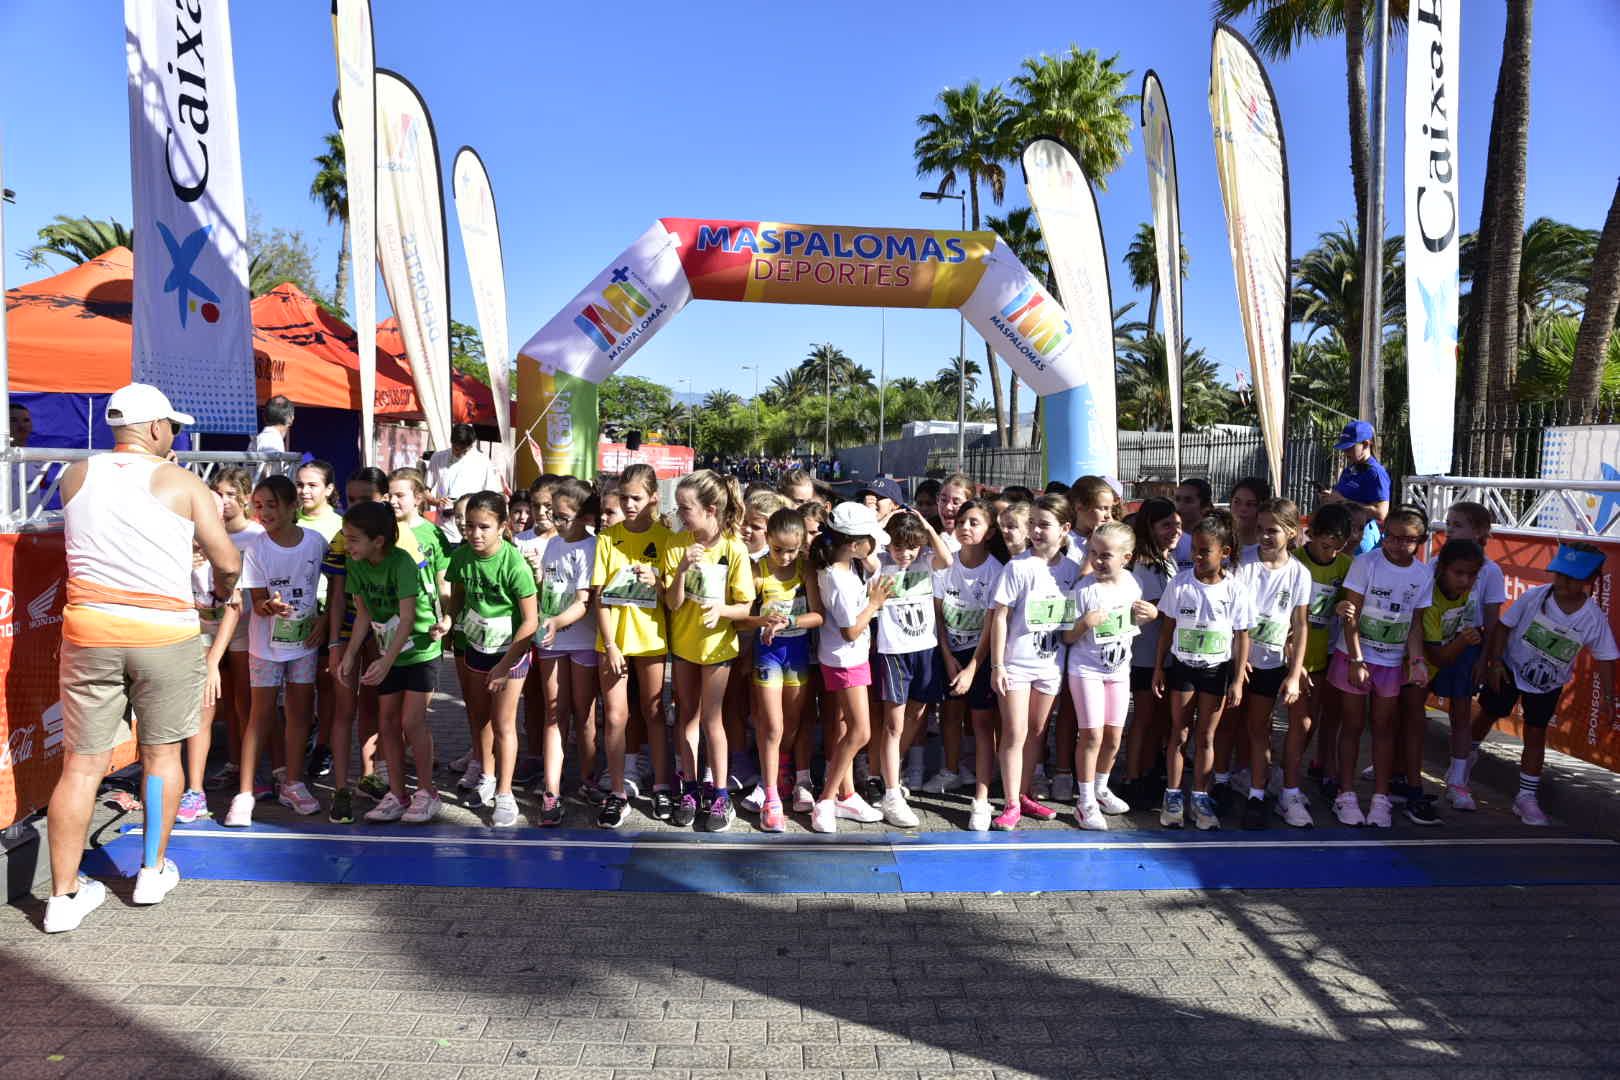 CaixaBank Mini Marathon